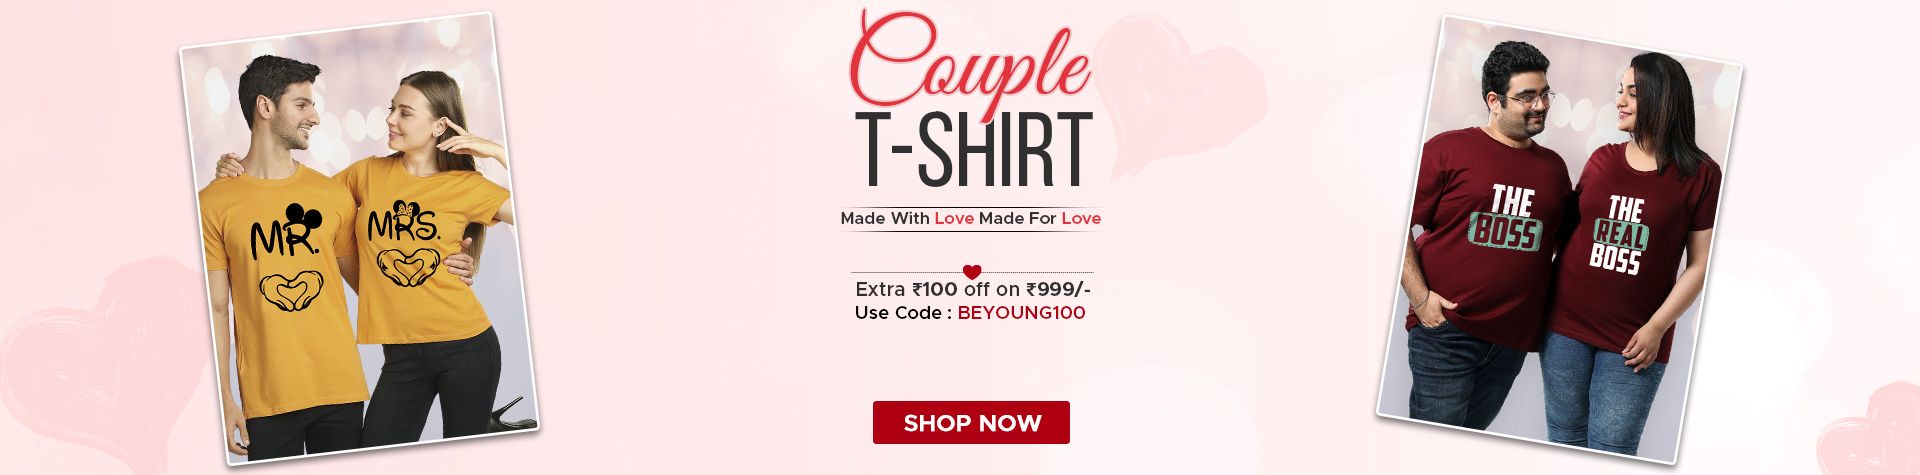 Couple T shirts Online